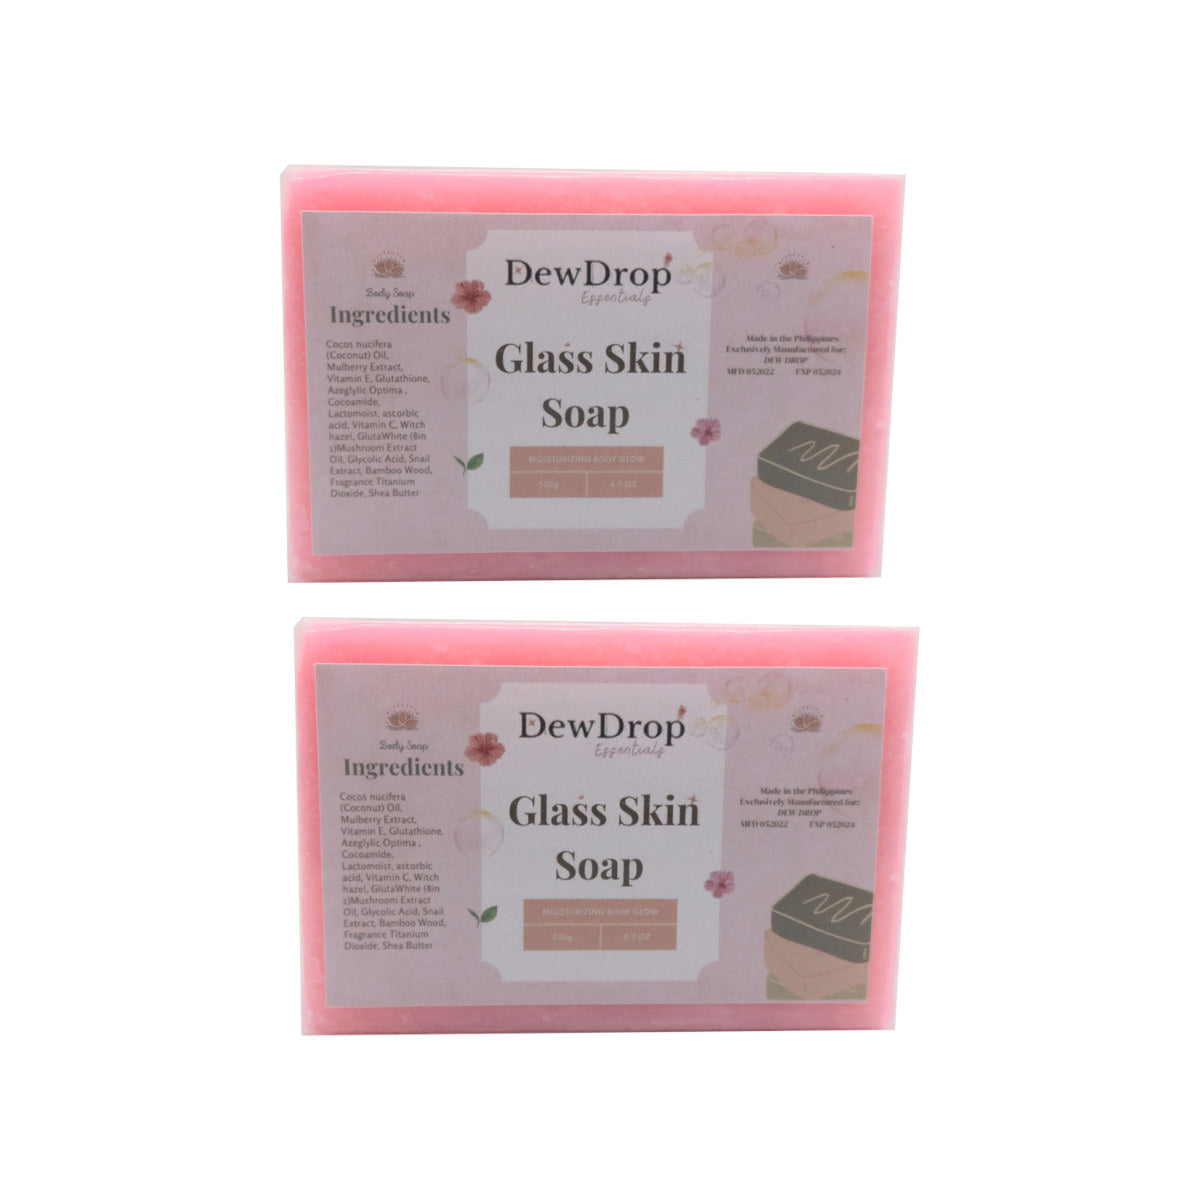 Dewdrop Glass Skin Beauty Soap 2 Pieces | Dewmart